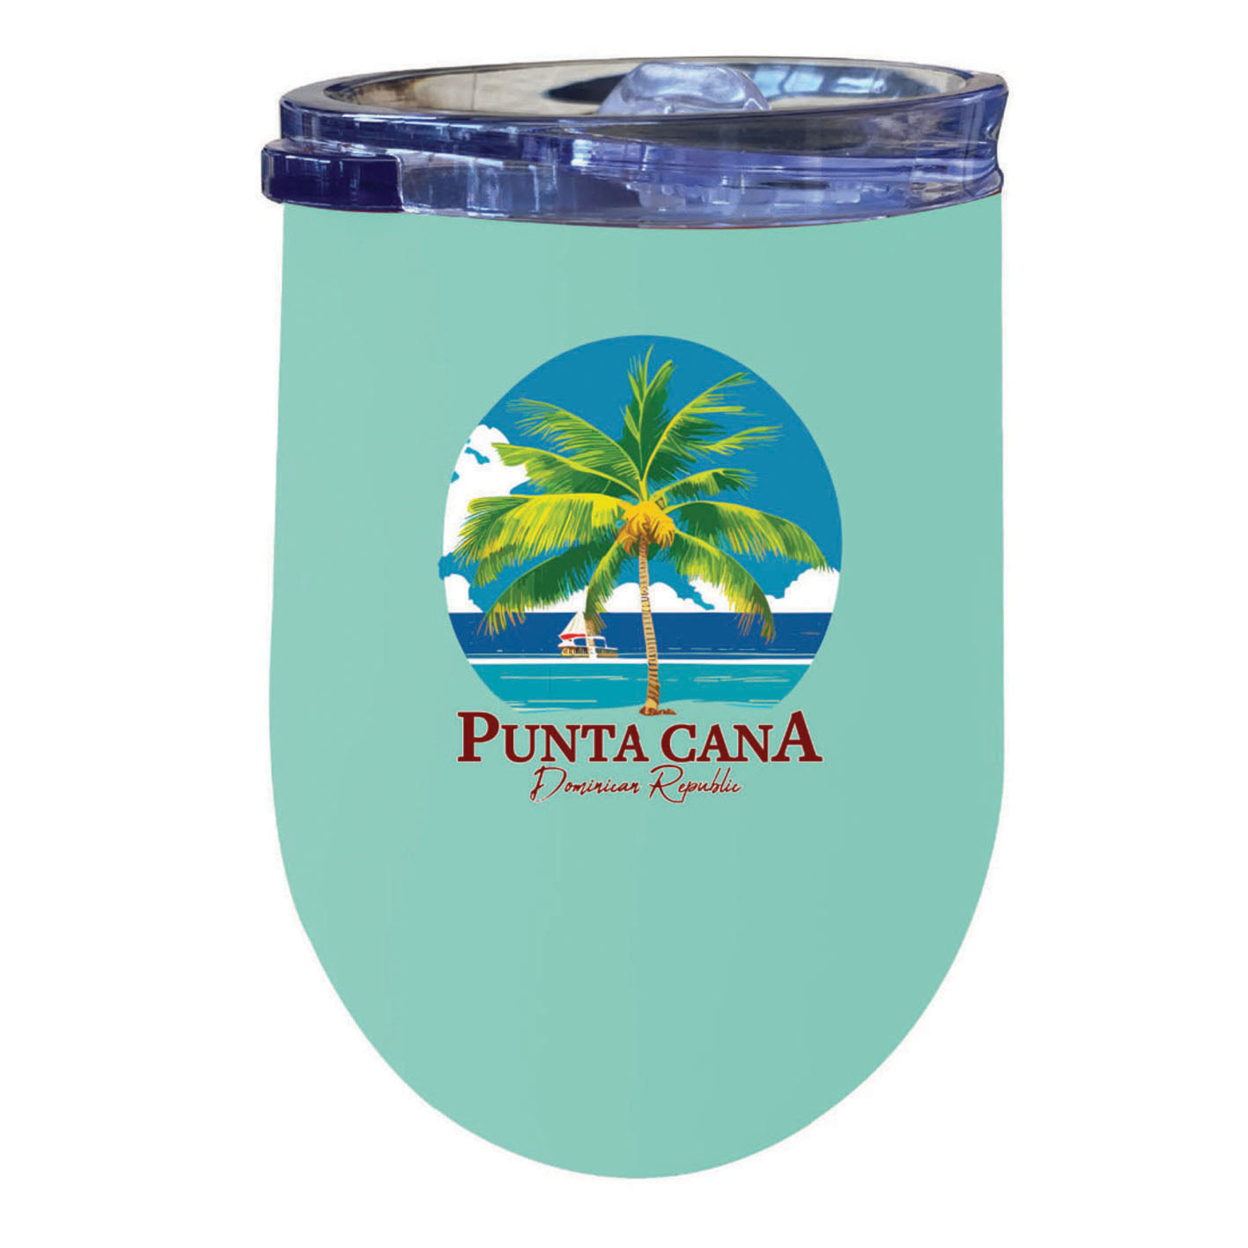 Punta Cana Dominican Republic Souvenir 12 Oz Insulated Wine Stainless Steel Tumbler - Seafoam, PALM